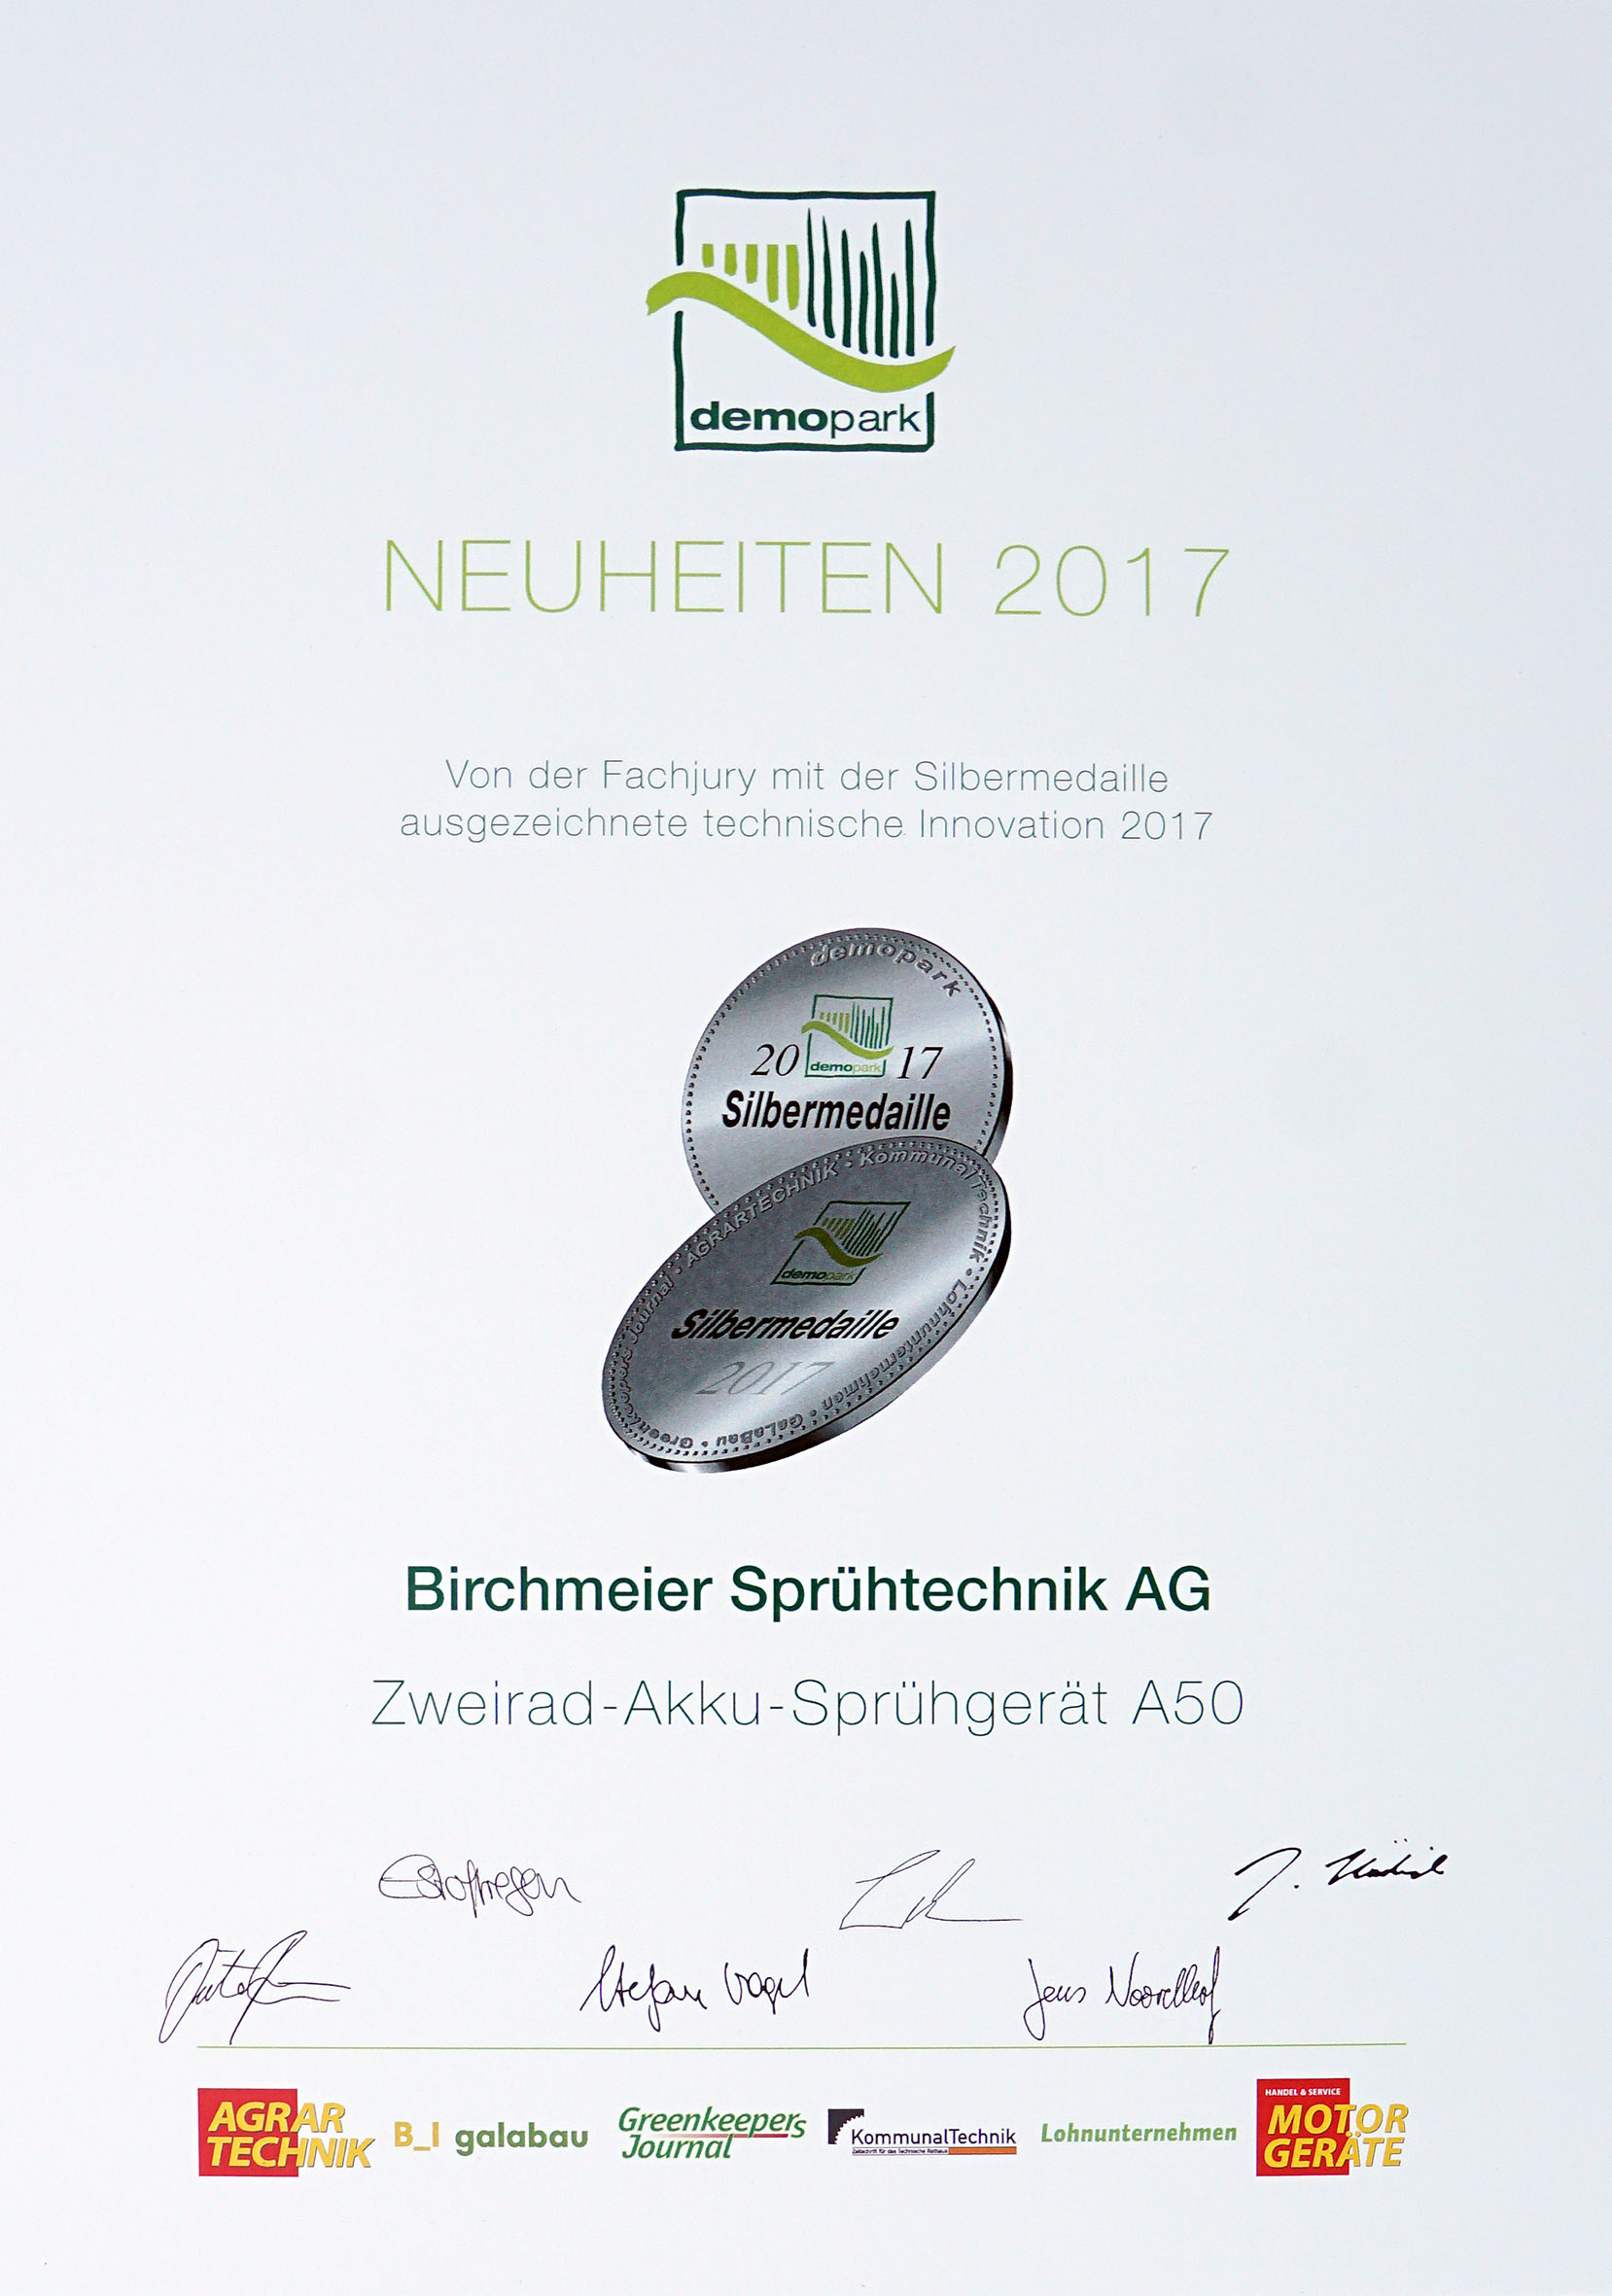 Zweirad Akku-Sprühgerät gewinnt Innovation Award Demopark 2017